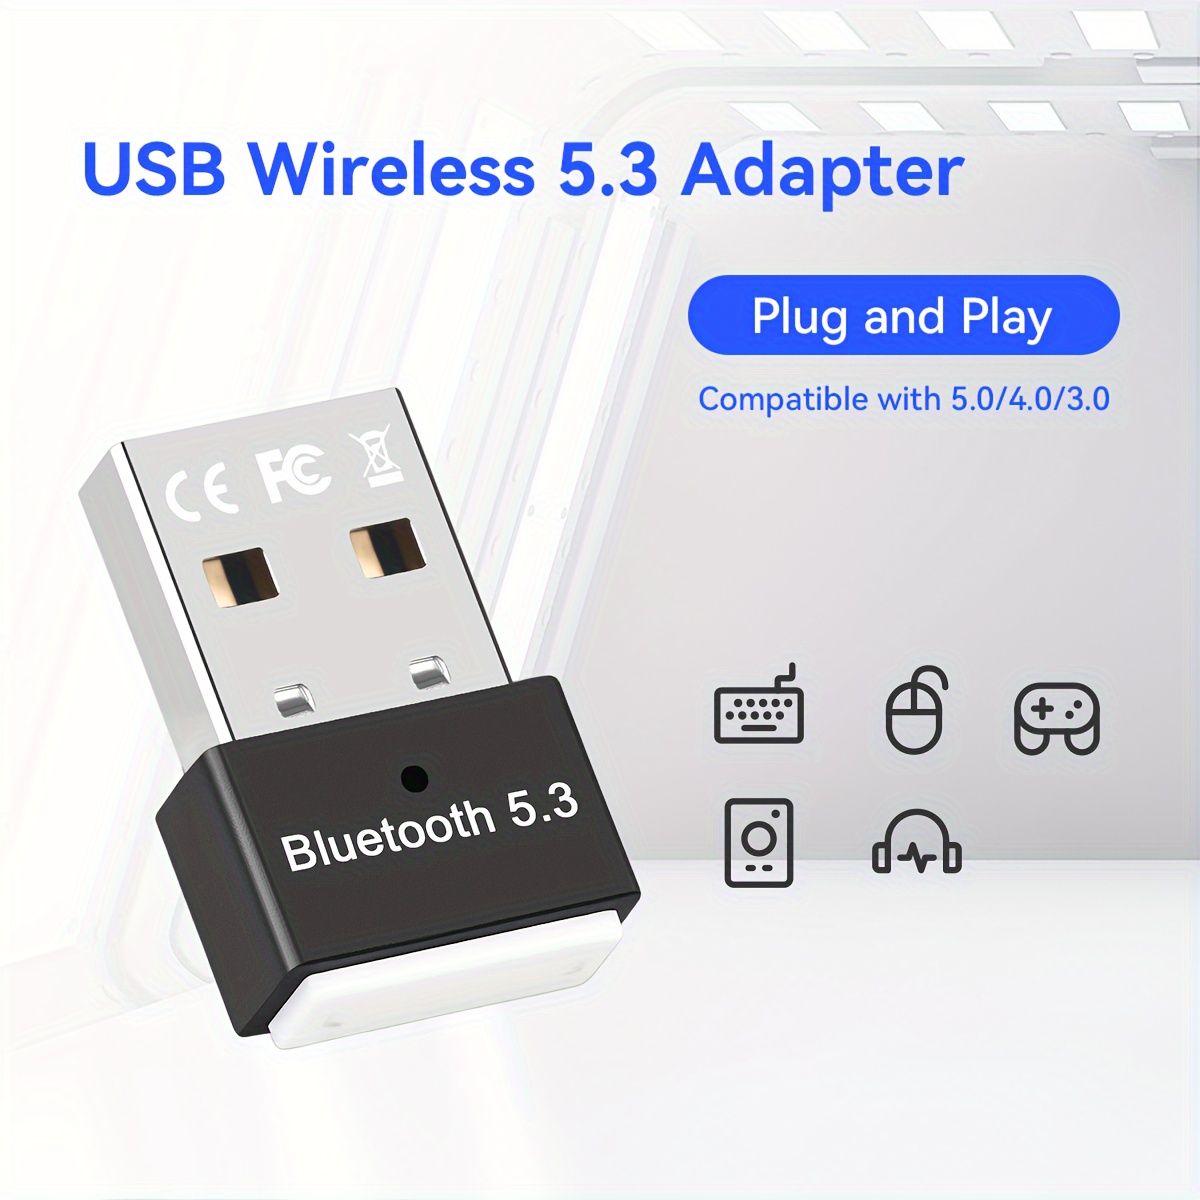 True 5.0 Bluetooth Adapter Usb Bluetooth Transmitter for Pc